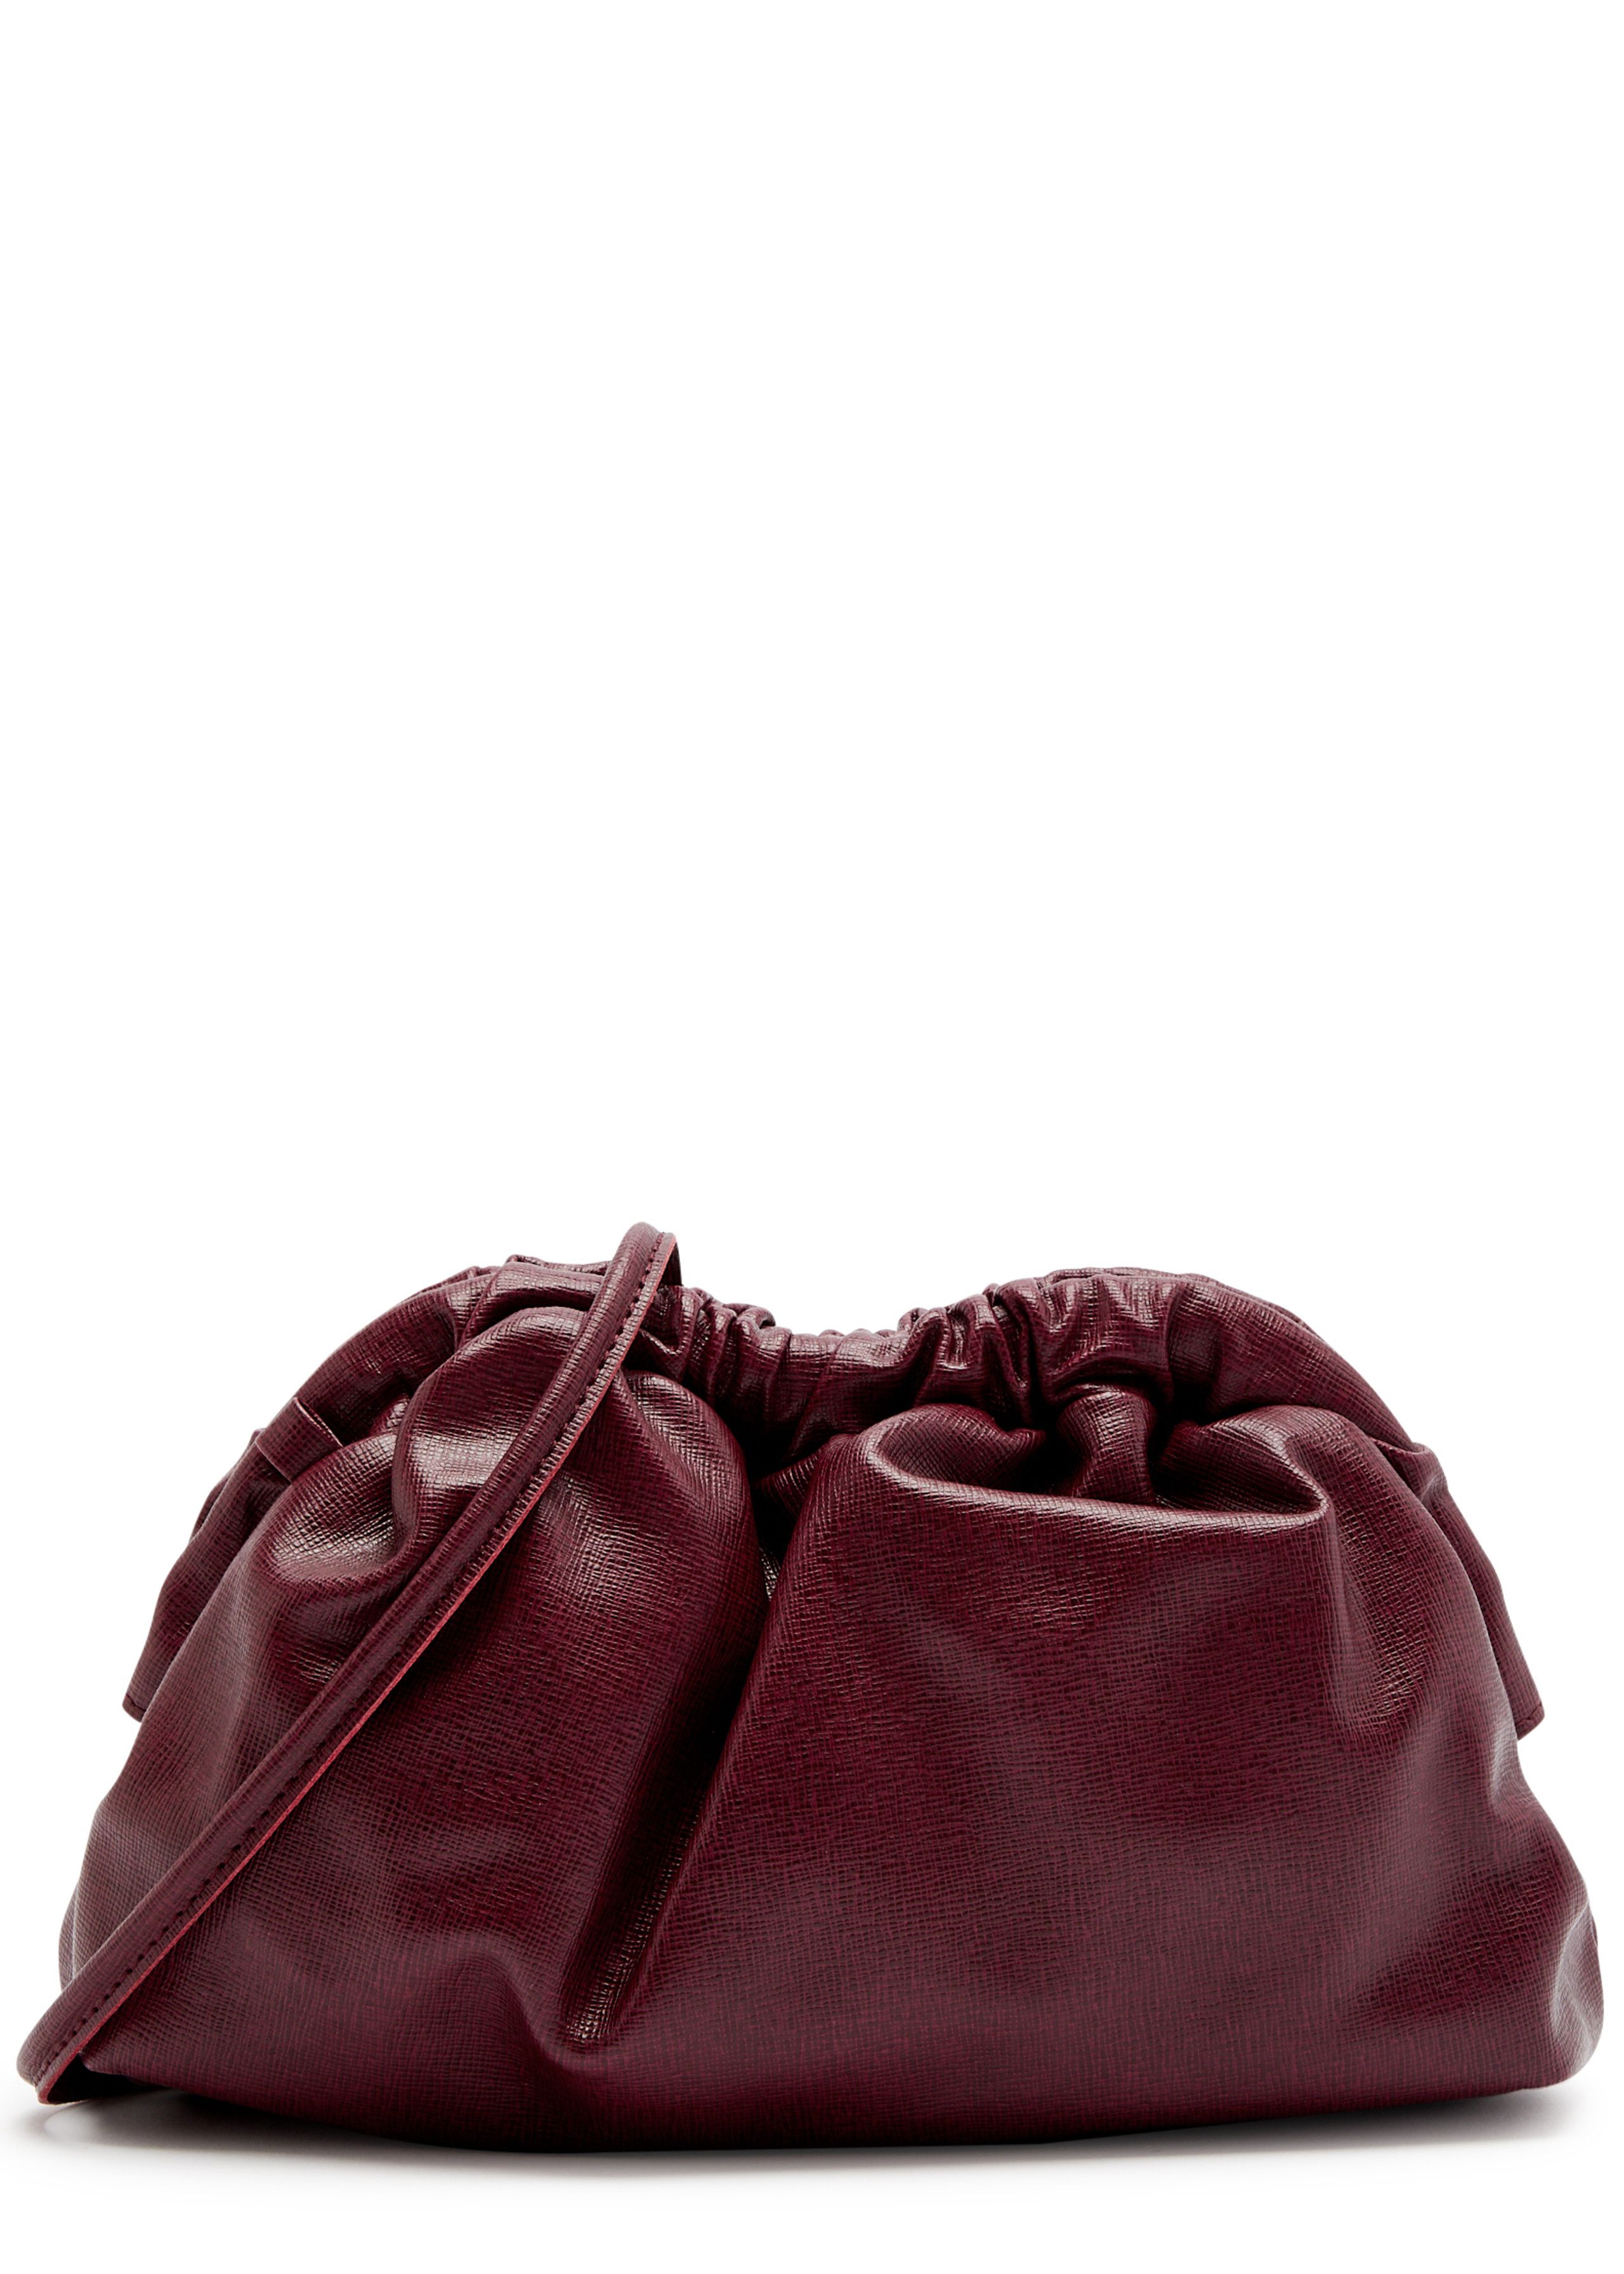 Cloud mini leather clutch | Harvey Nichols (Global)